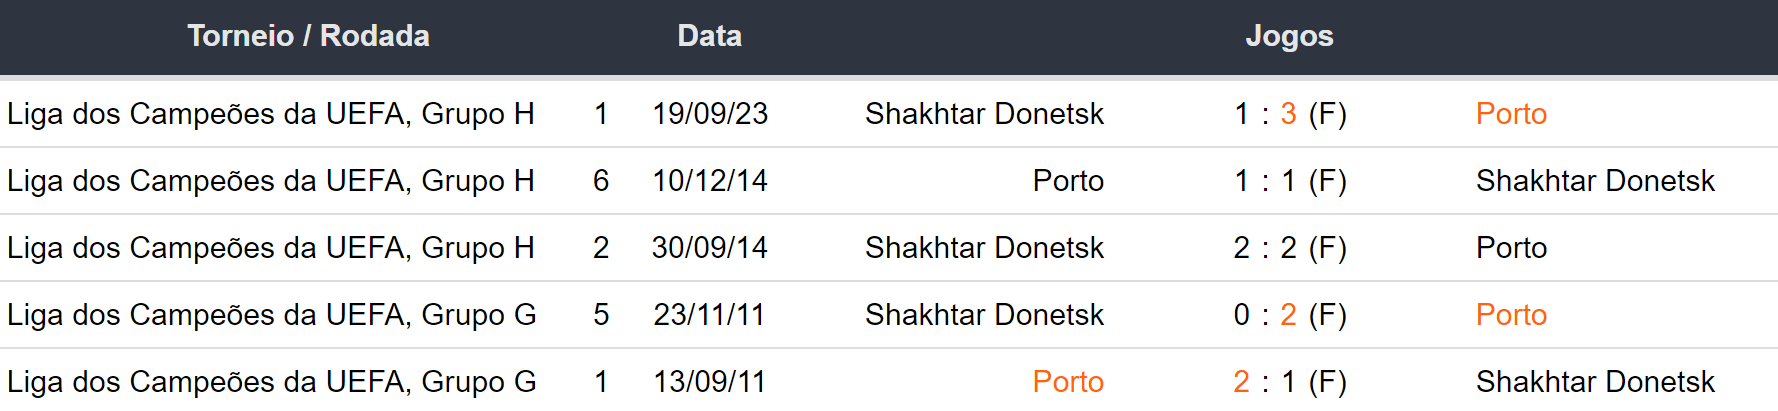 Ultimos 5 encontros Porto x Shakhtar Donetsk 131223